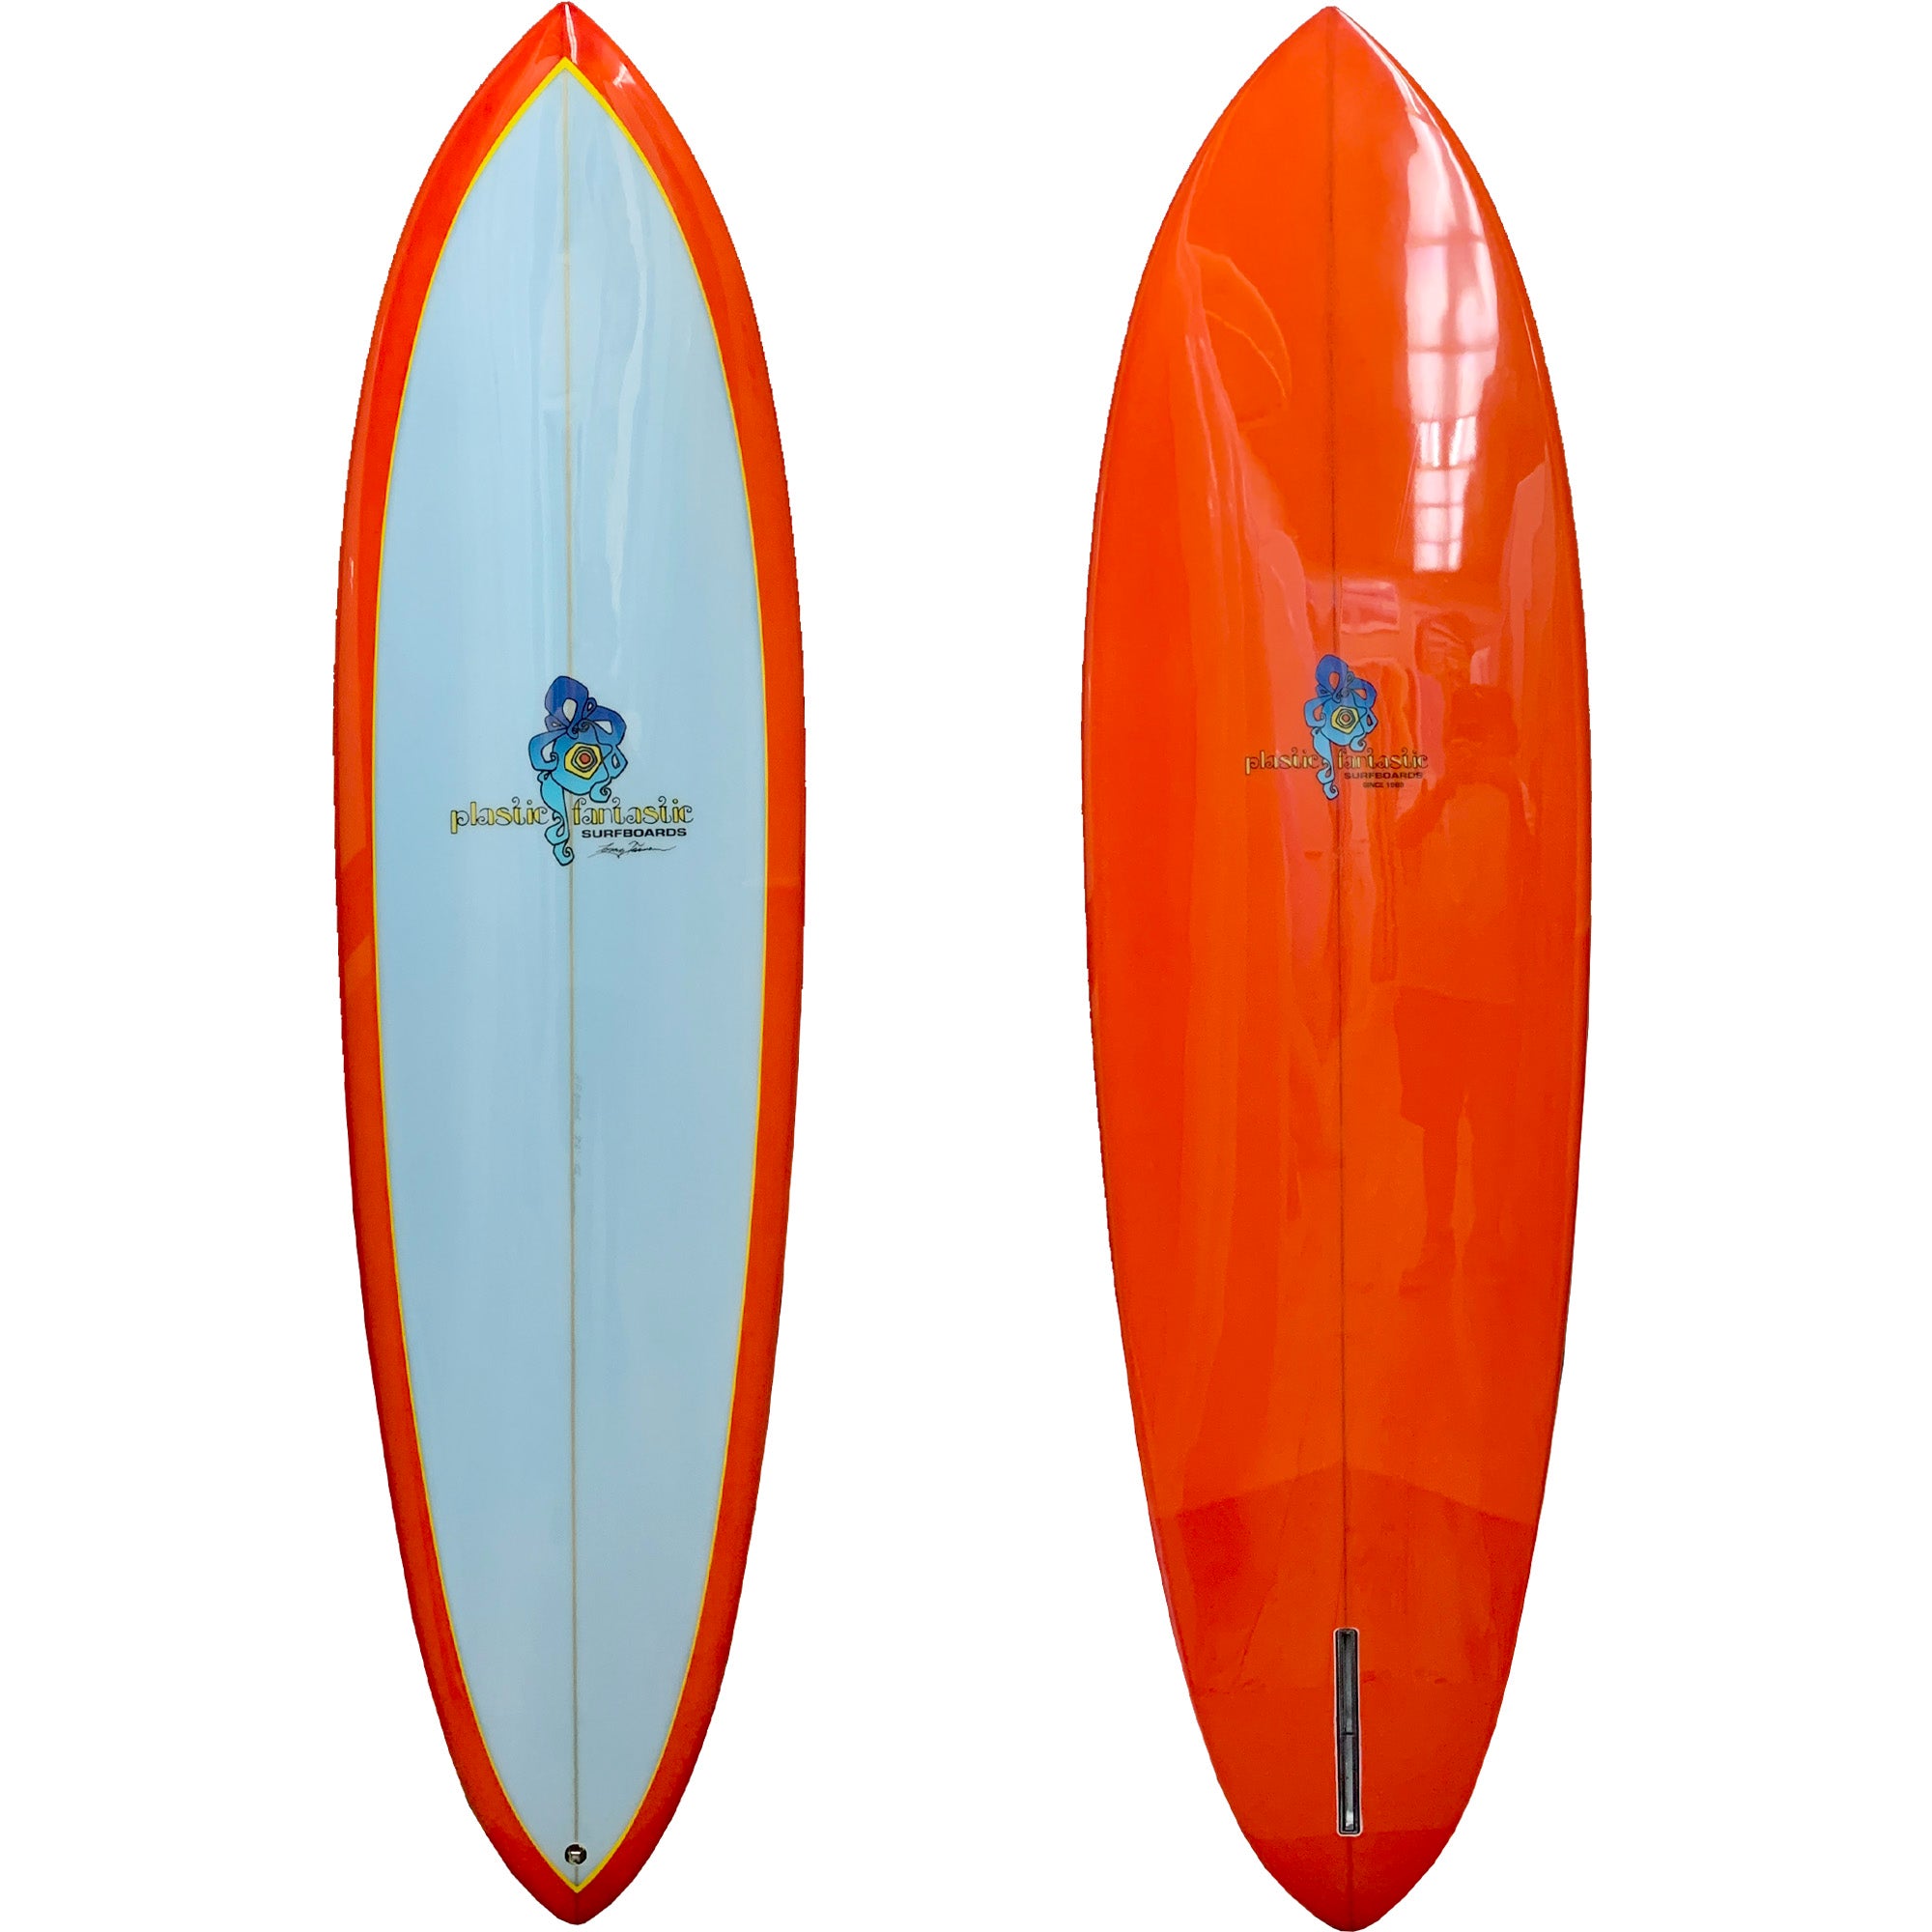 Plastic Fantastic Single Fin Surfboard